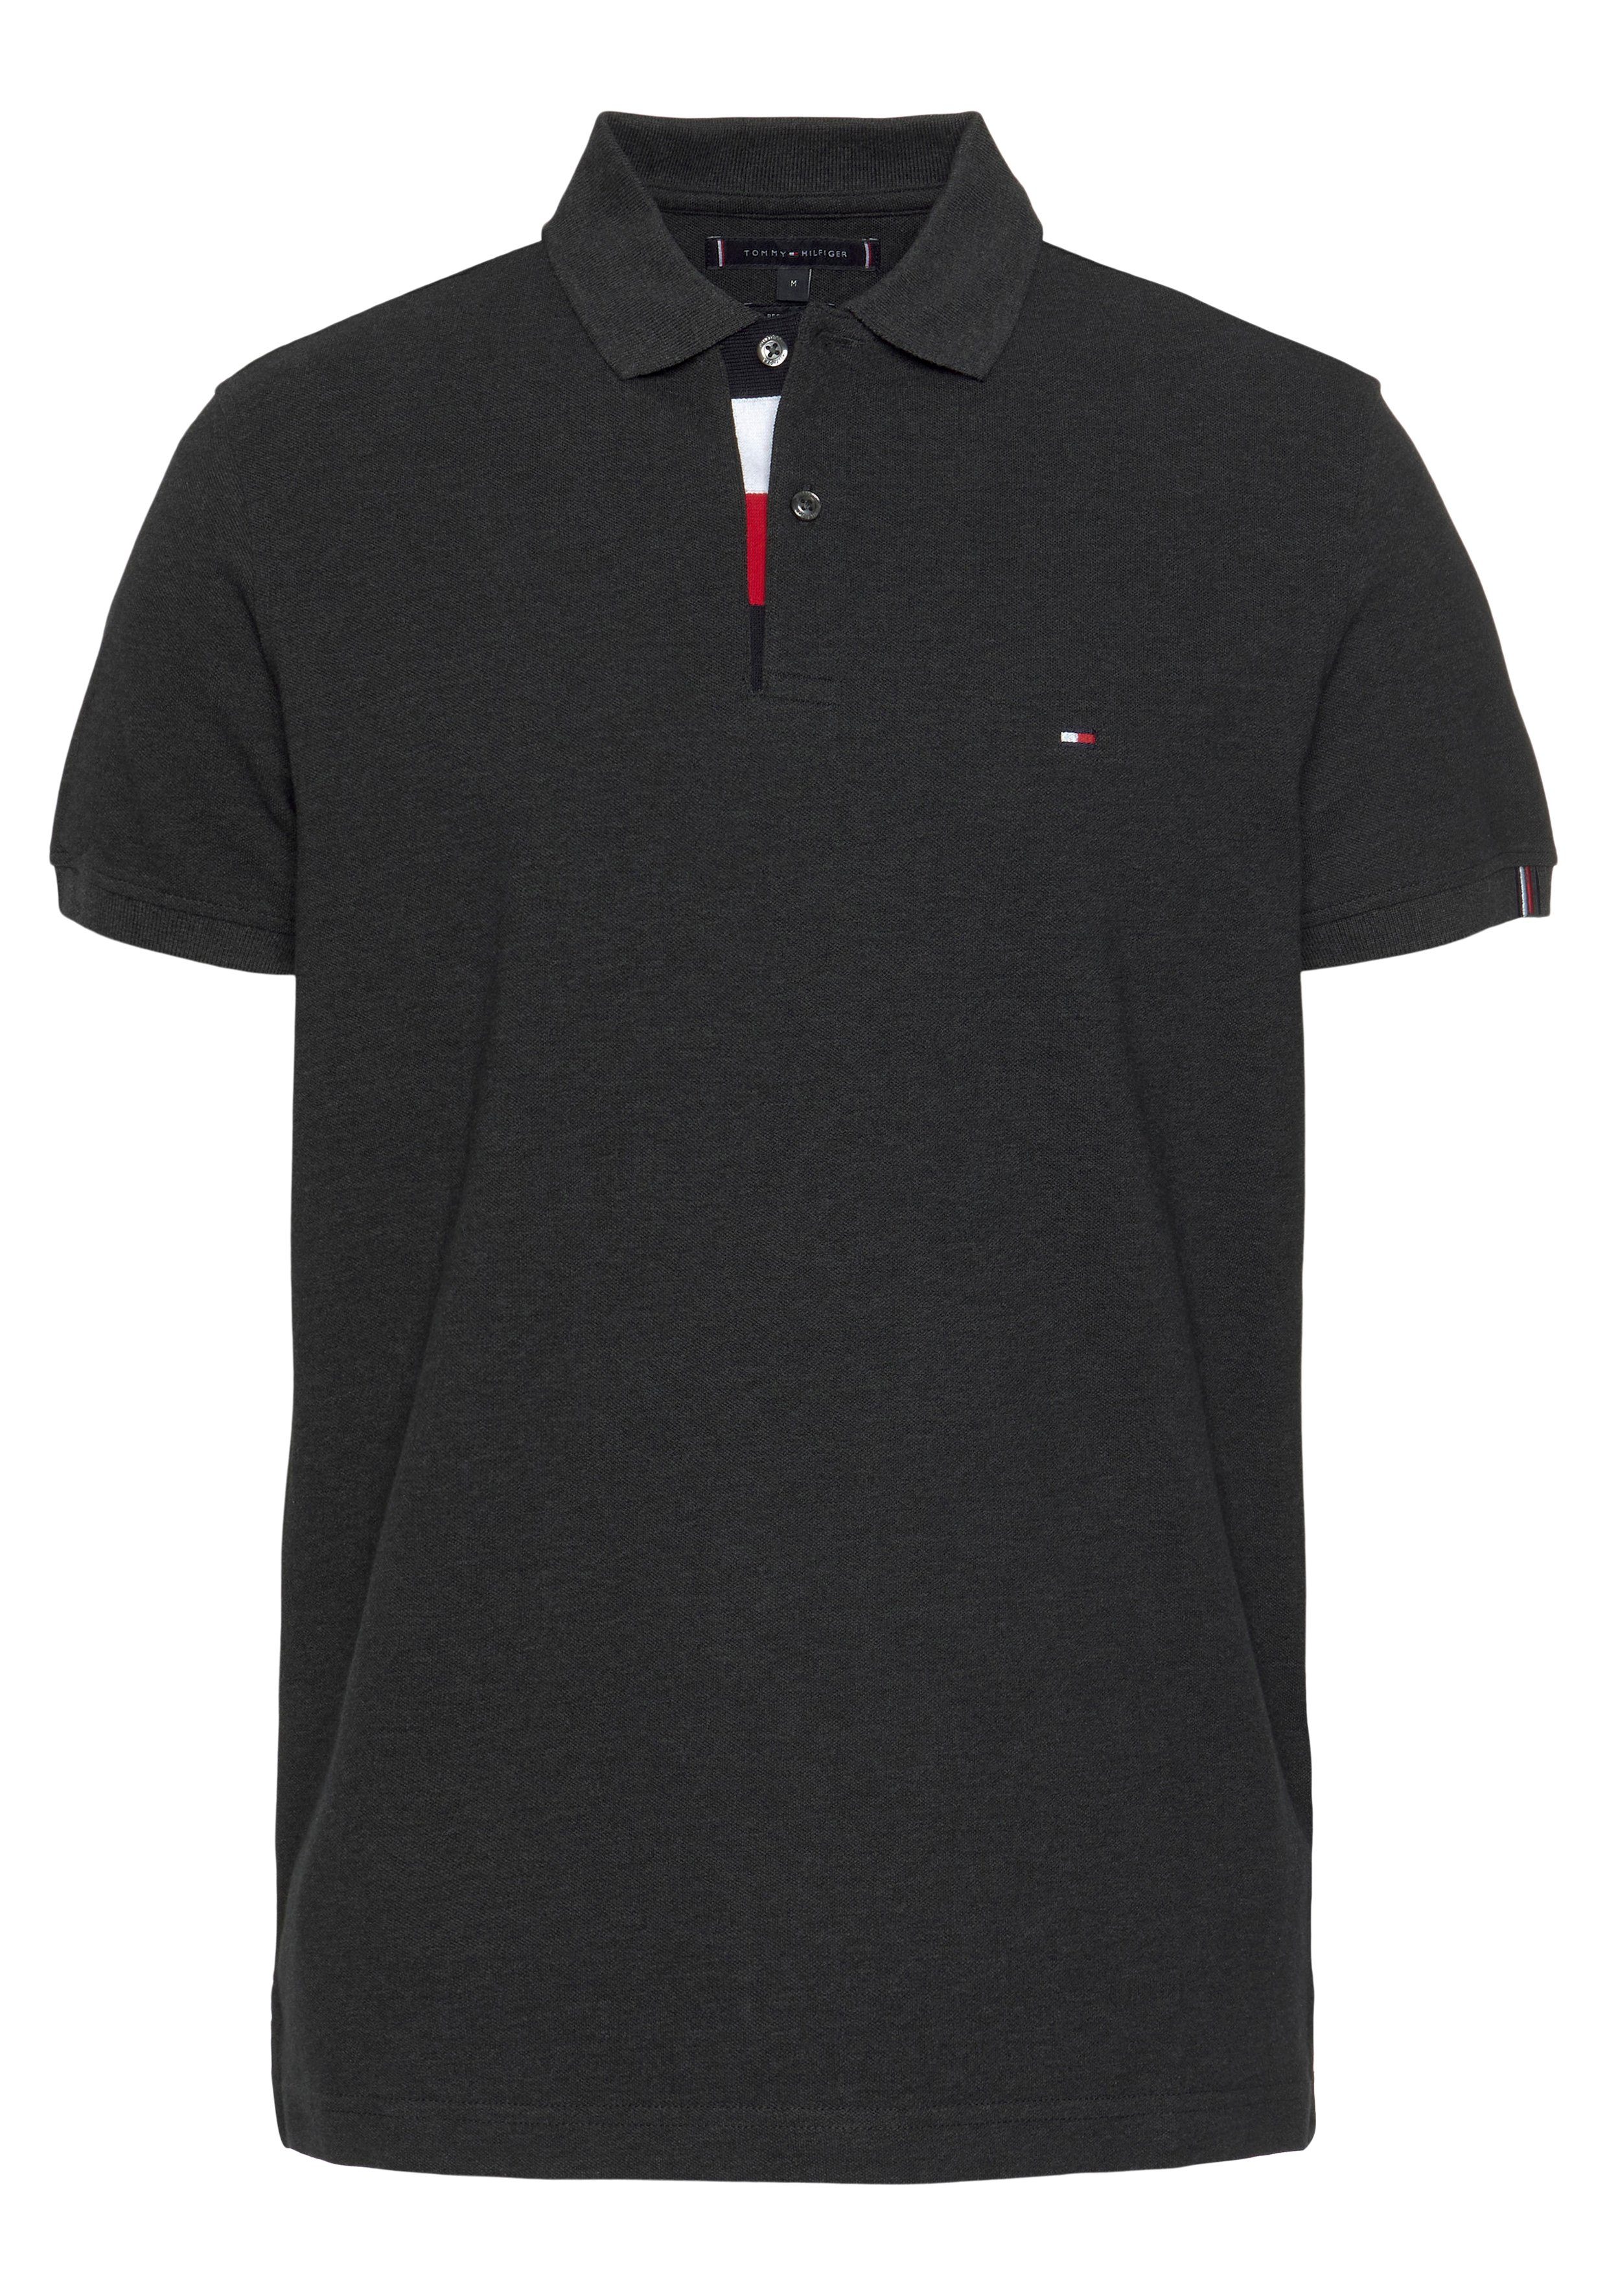 Tommy Hilfiger Poloshirts online kaufen » Polohemden | OTTO